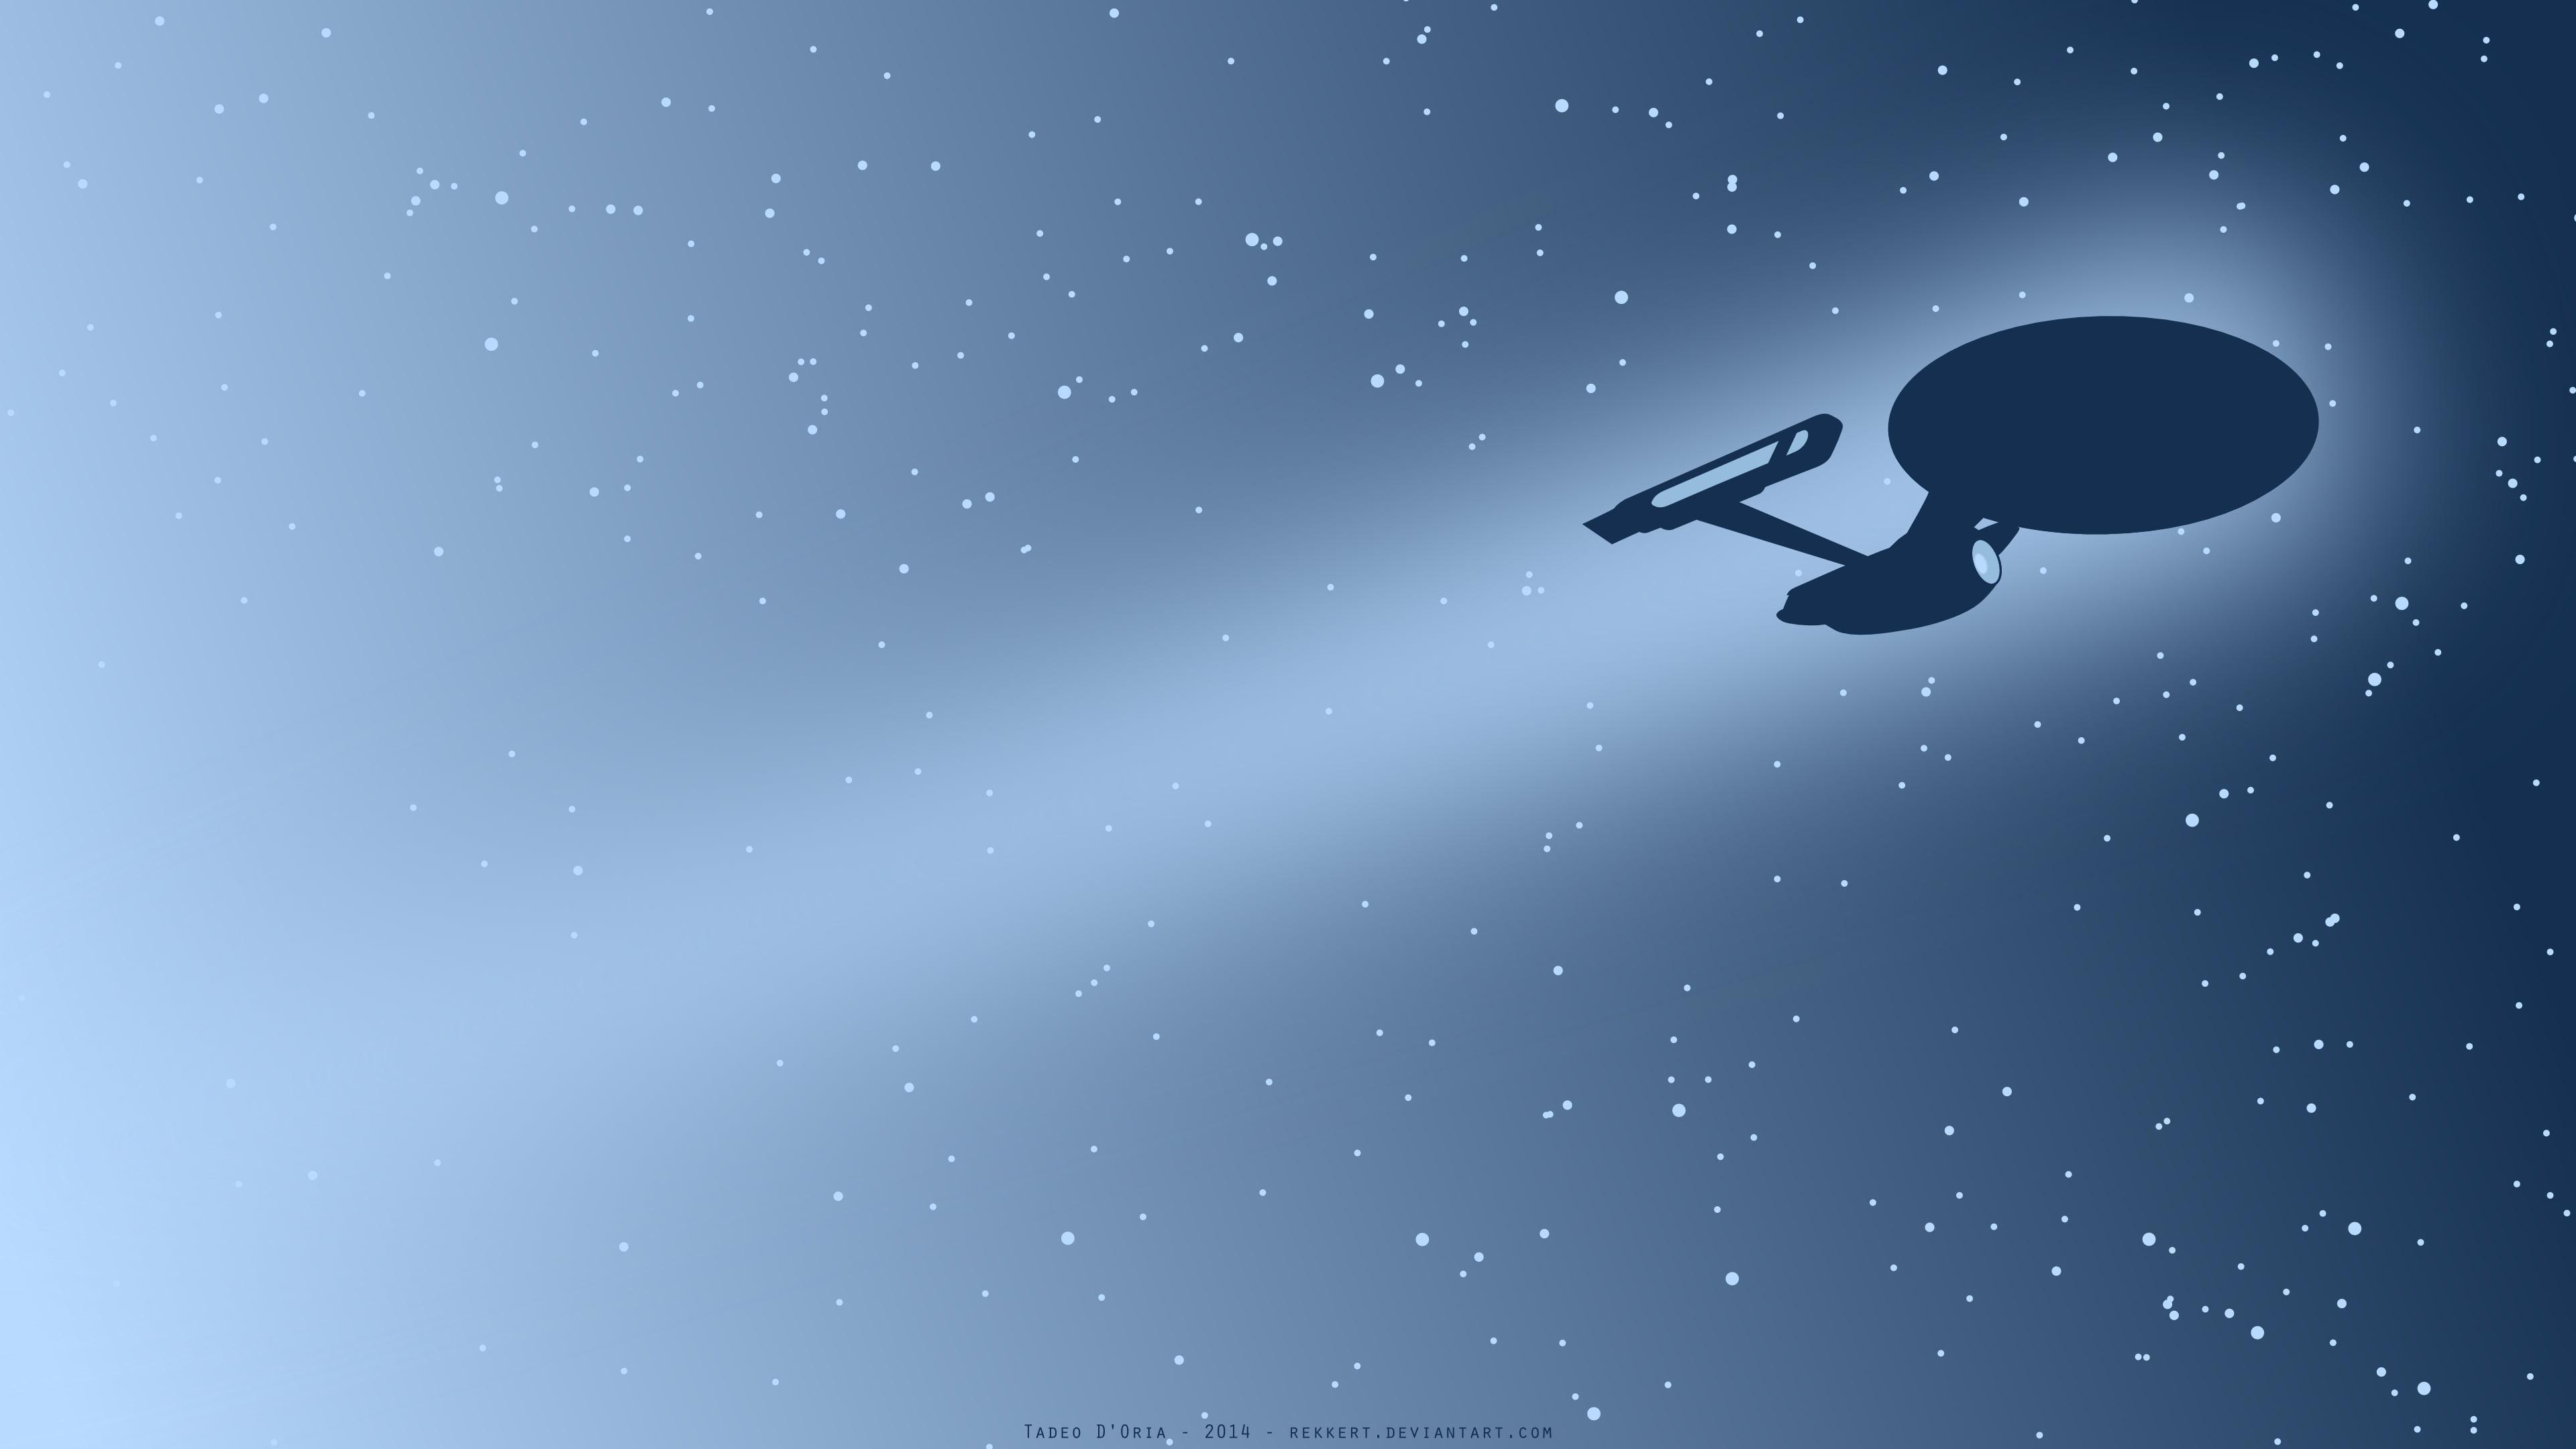 USS Enterprise illustration, Star Trek, USS Enterprise spaceship